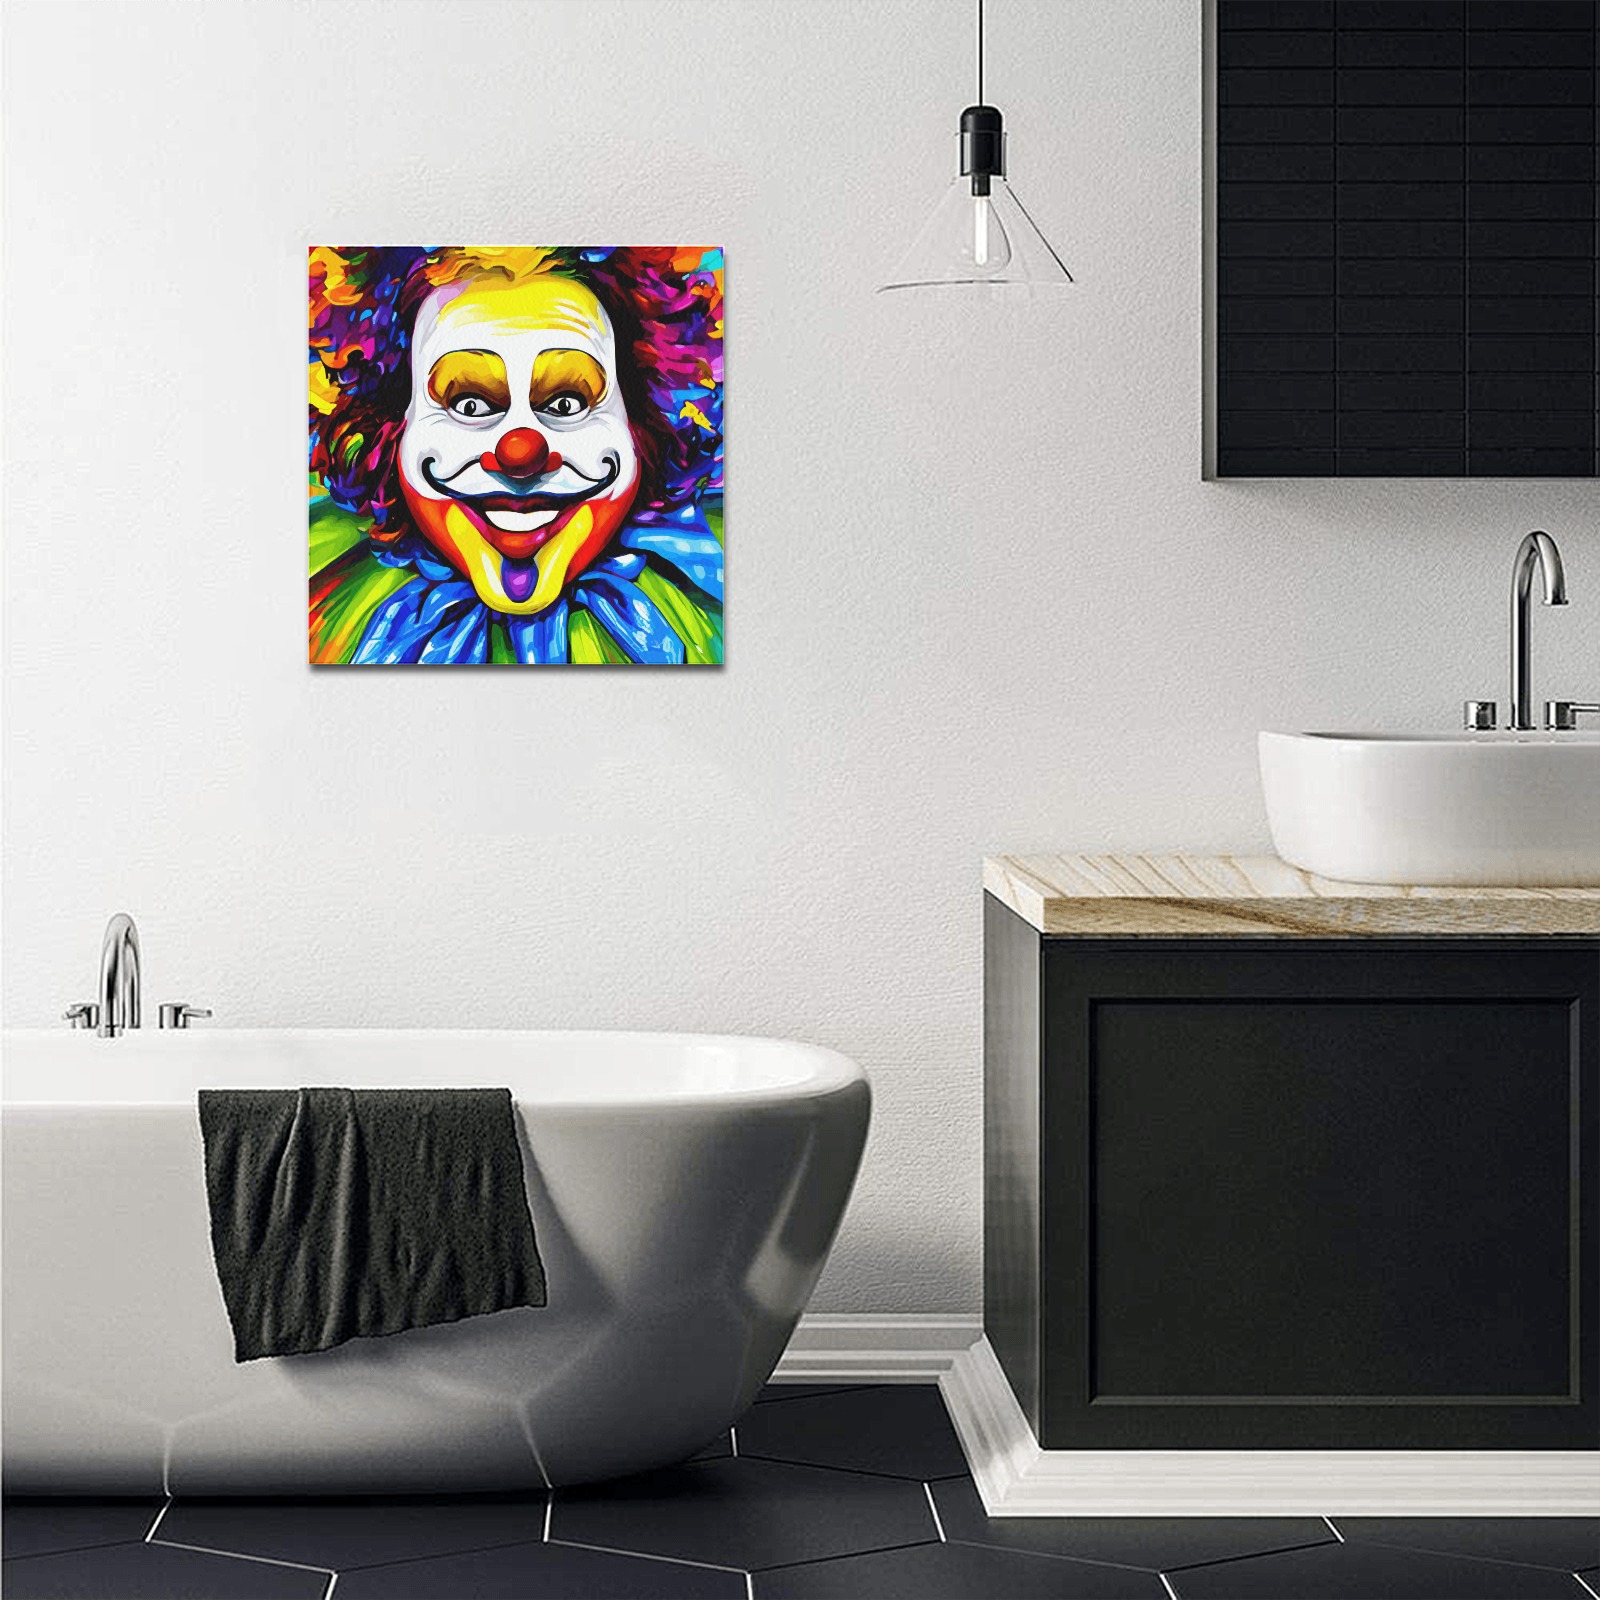 clown-001 Upgraded Canvas Print 16"x16"